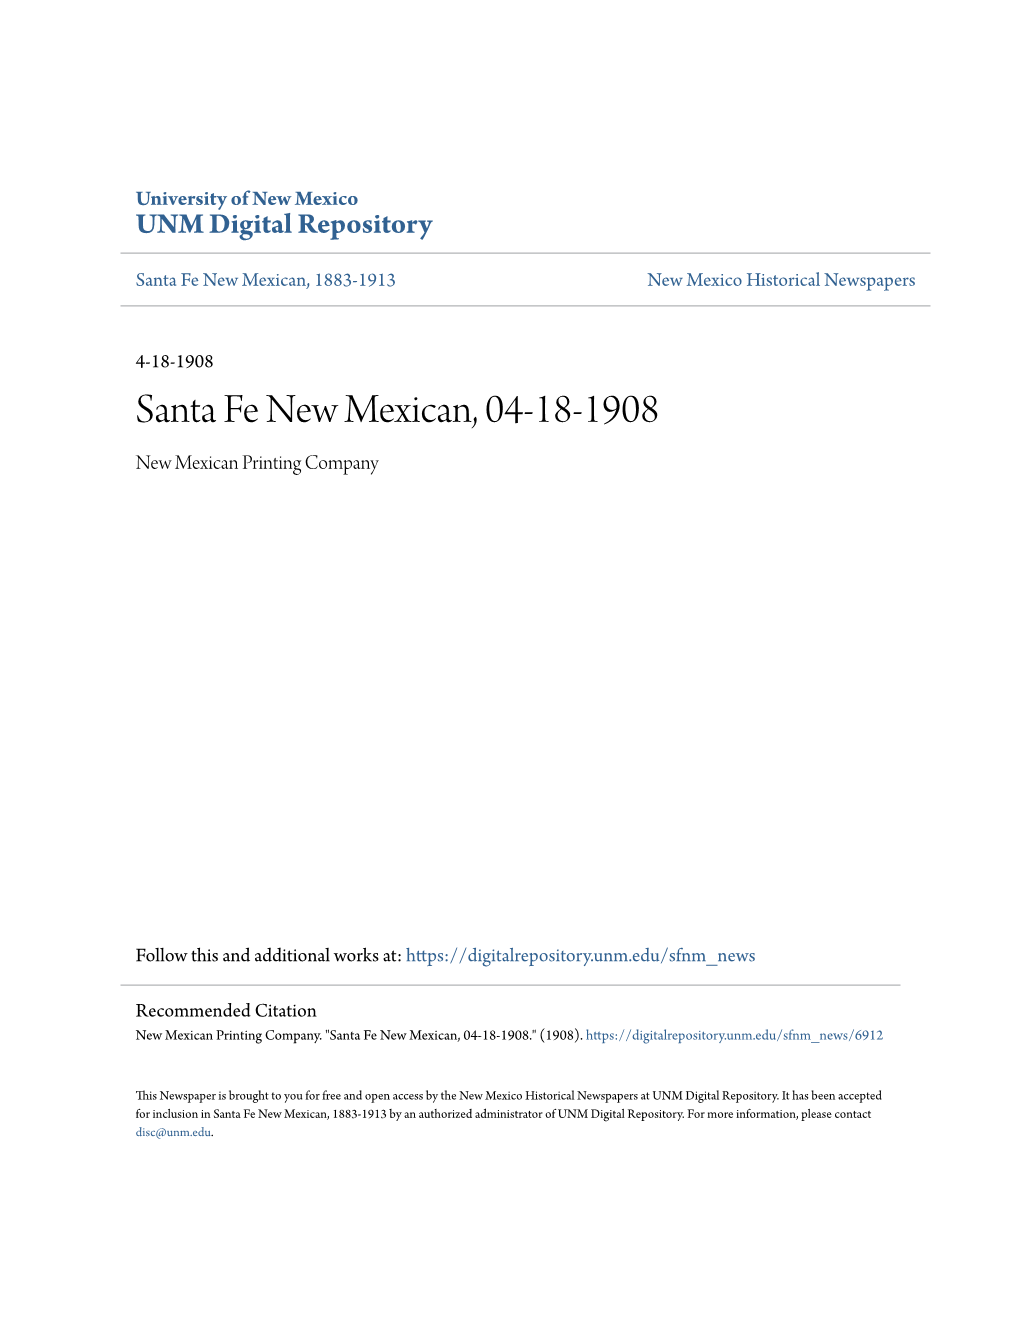 Santa Fe New Mexican, 04-18-1908 New Mexican Printing Company